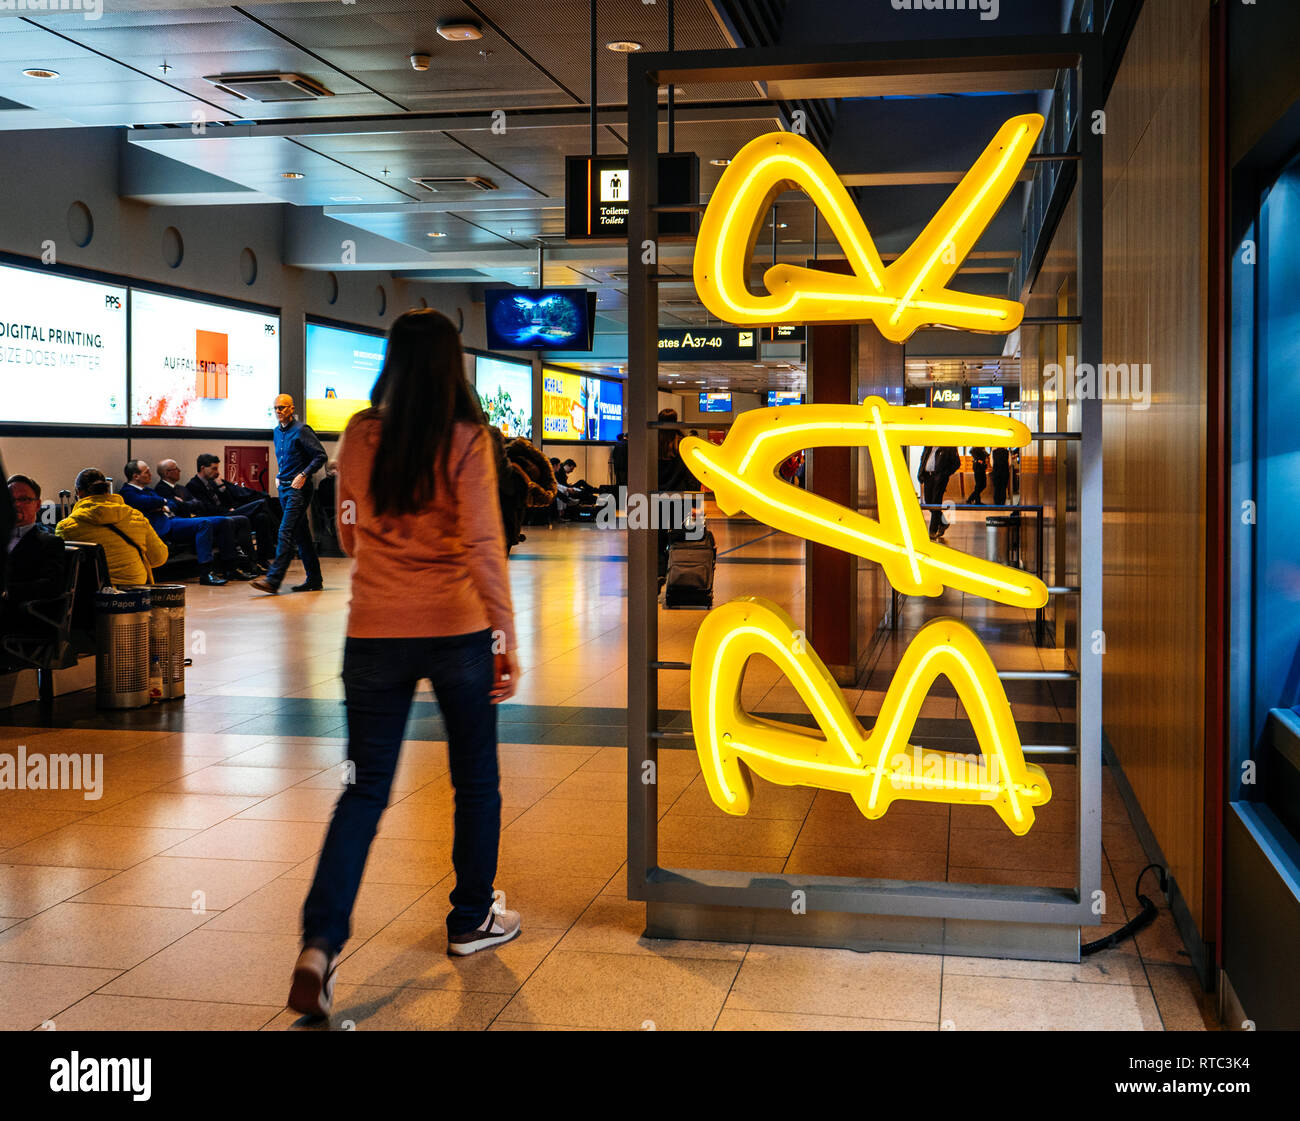 HAMBURG, GERMANY - MAR 22, 2018: People inside Hamburg airport interior waiting for flight, walking neon bar sign Stock Photo